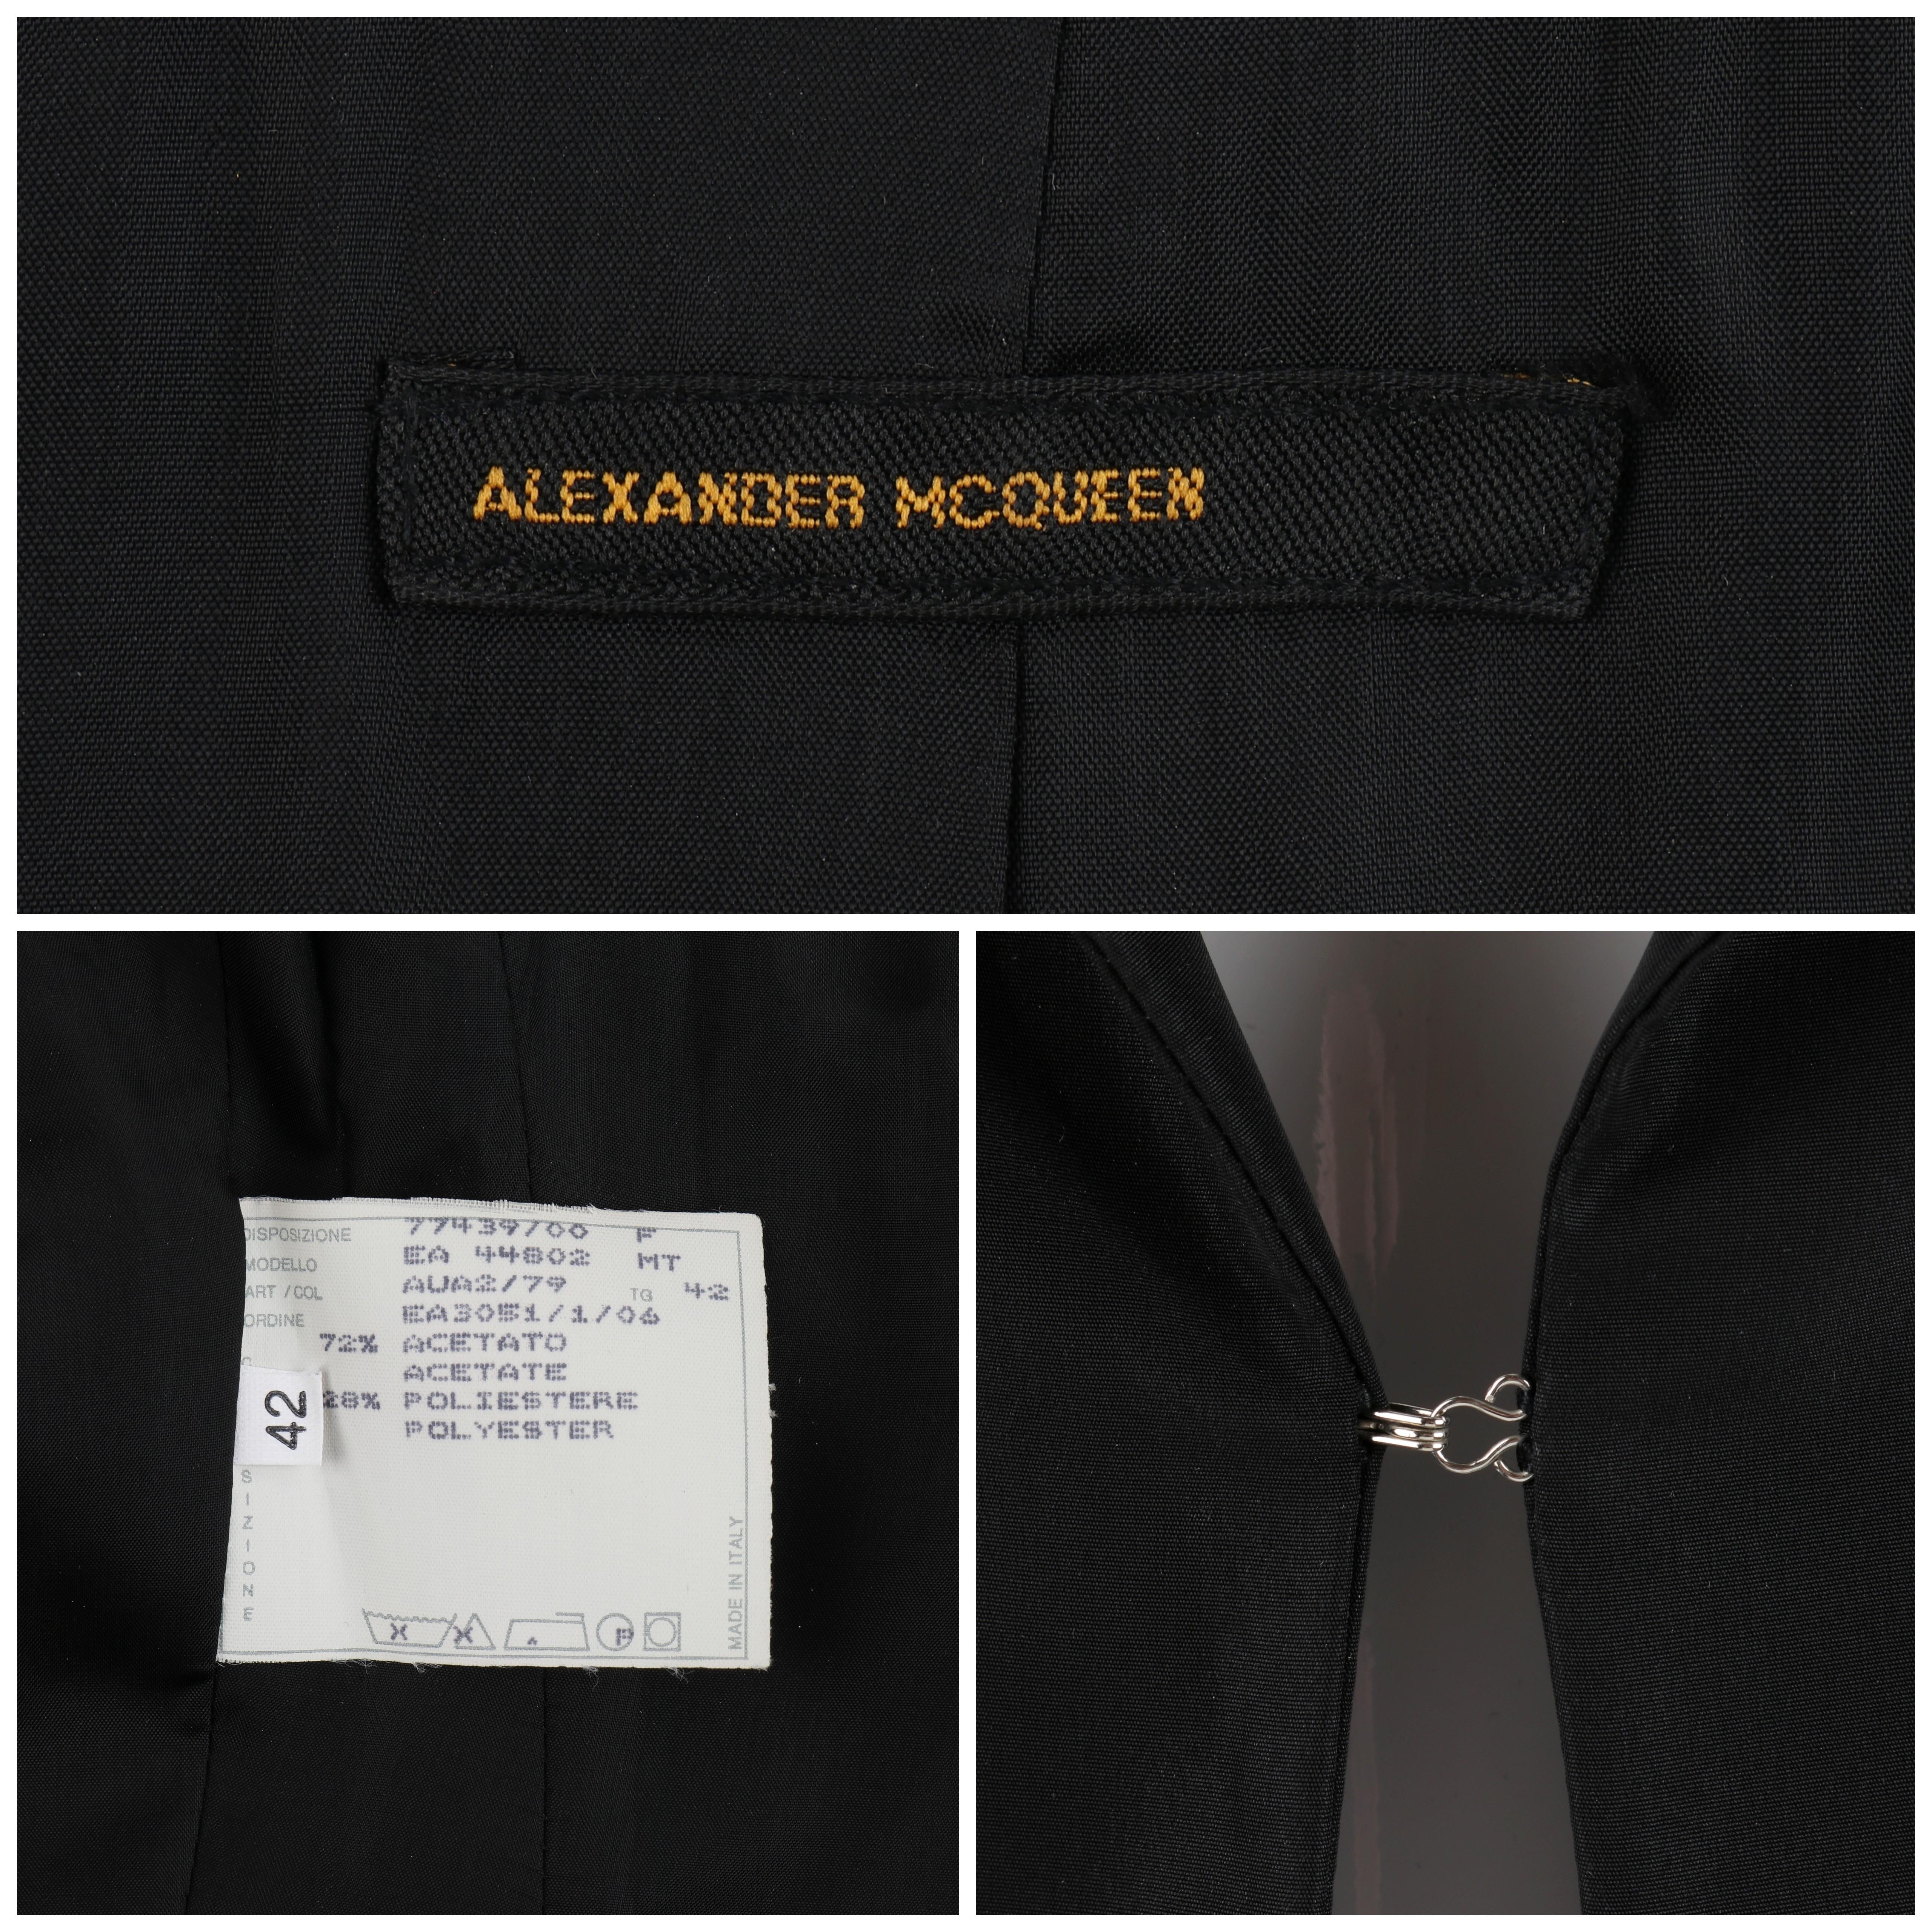 ALEXANDER McQUEEN S/S 1997 “La Poupee” Black Single Closure Cutaway Dress Jacket For Sale 2